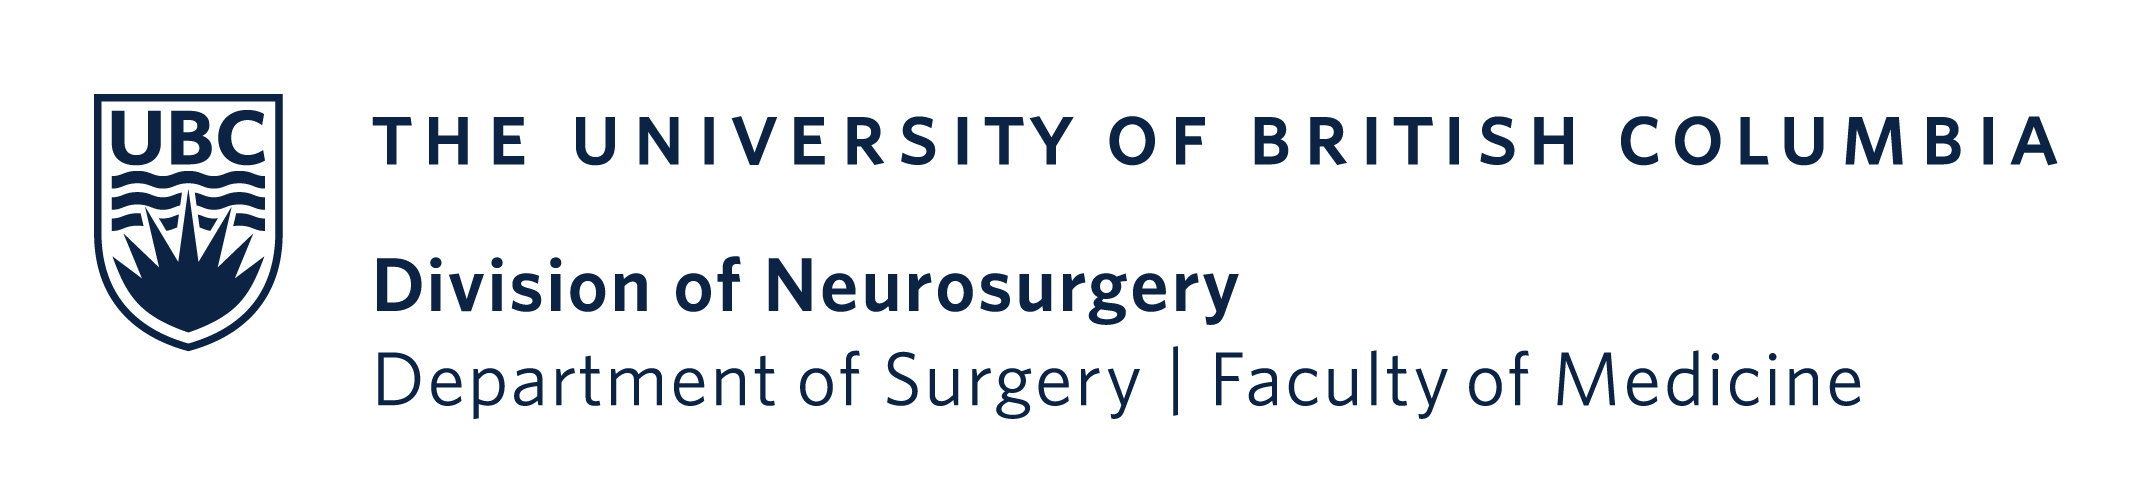 UBC Division of Neurosurgery